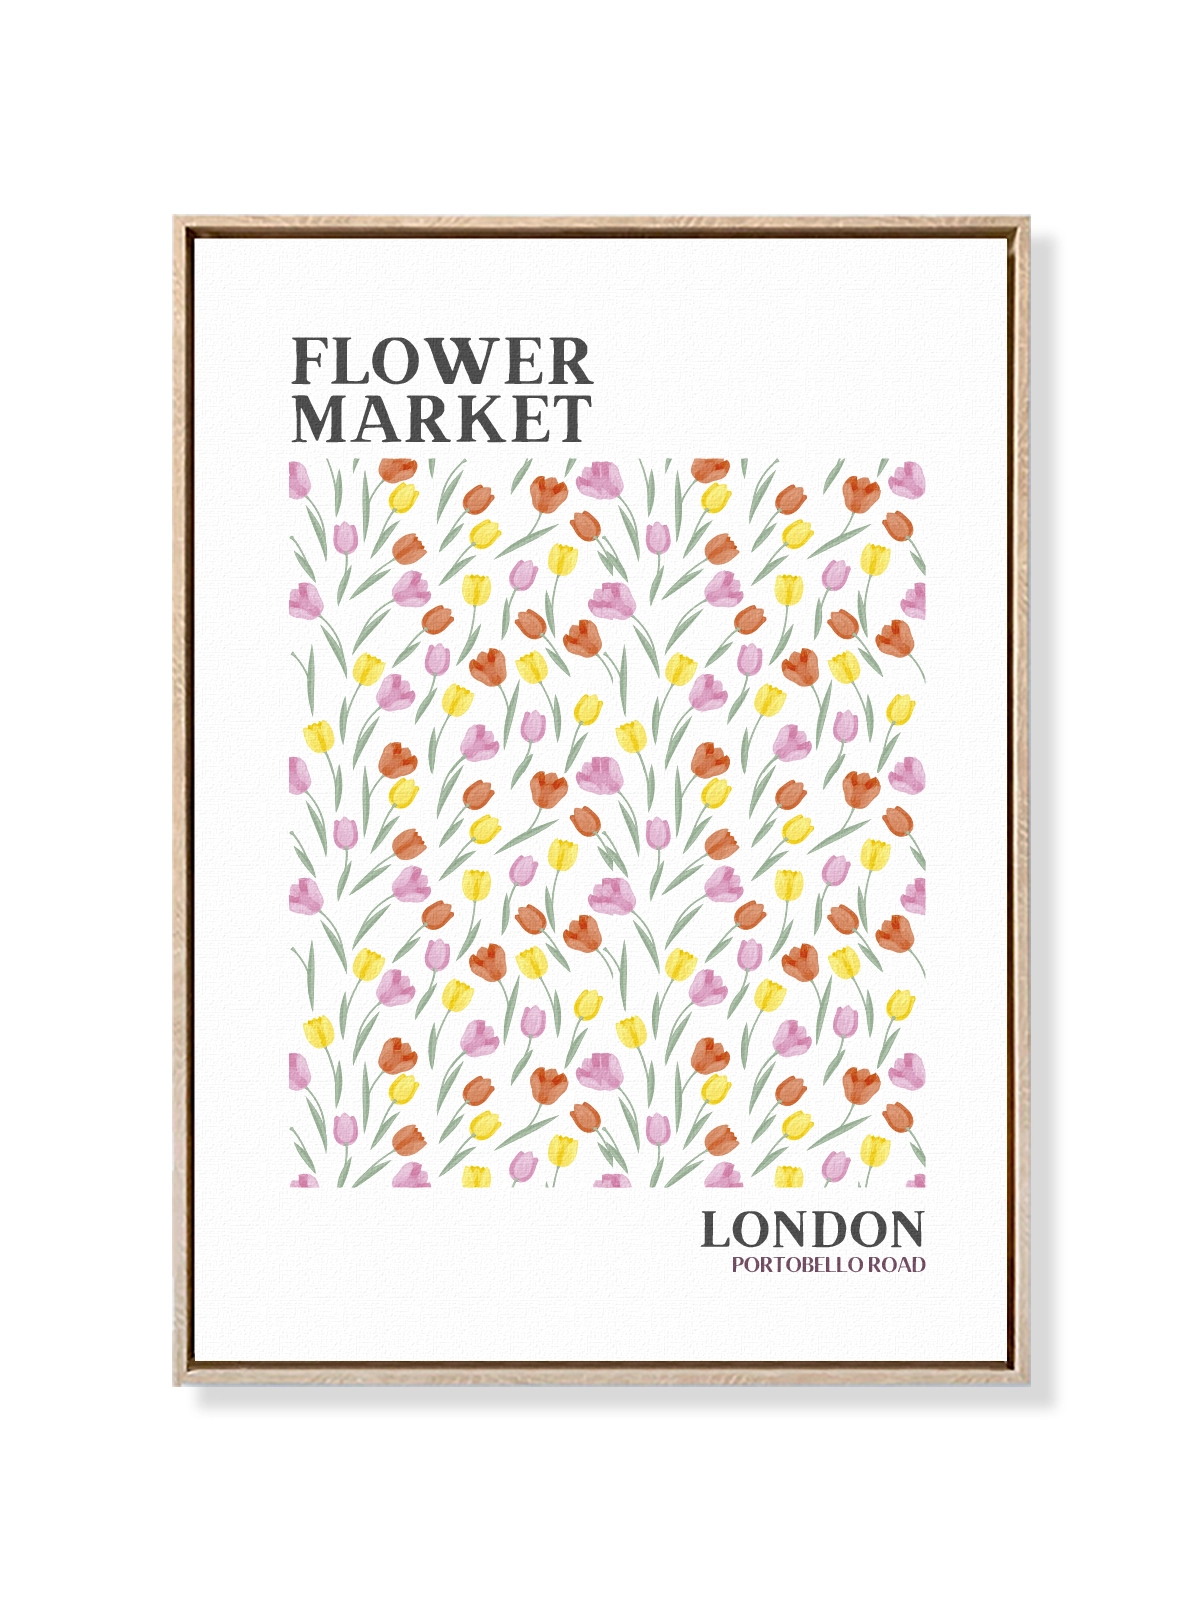 Flower Market London Portobello Road